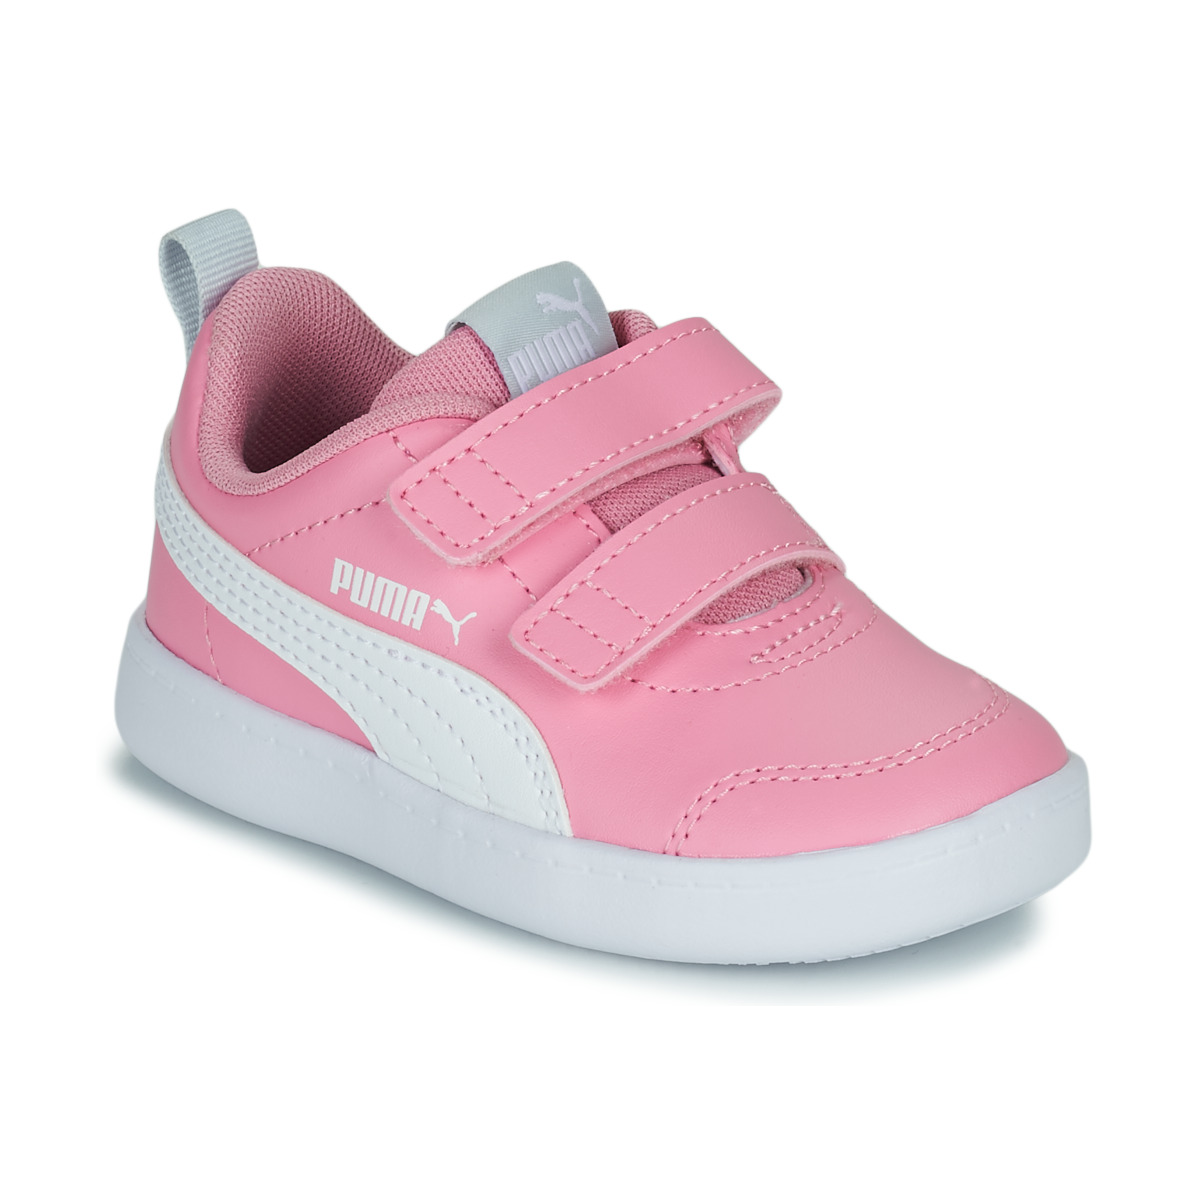 Puma Courtflex v2 V Inf Rosa / Weiss - Schuhe Sneaker Low Kind 59,99 €